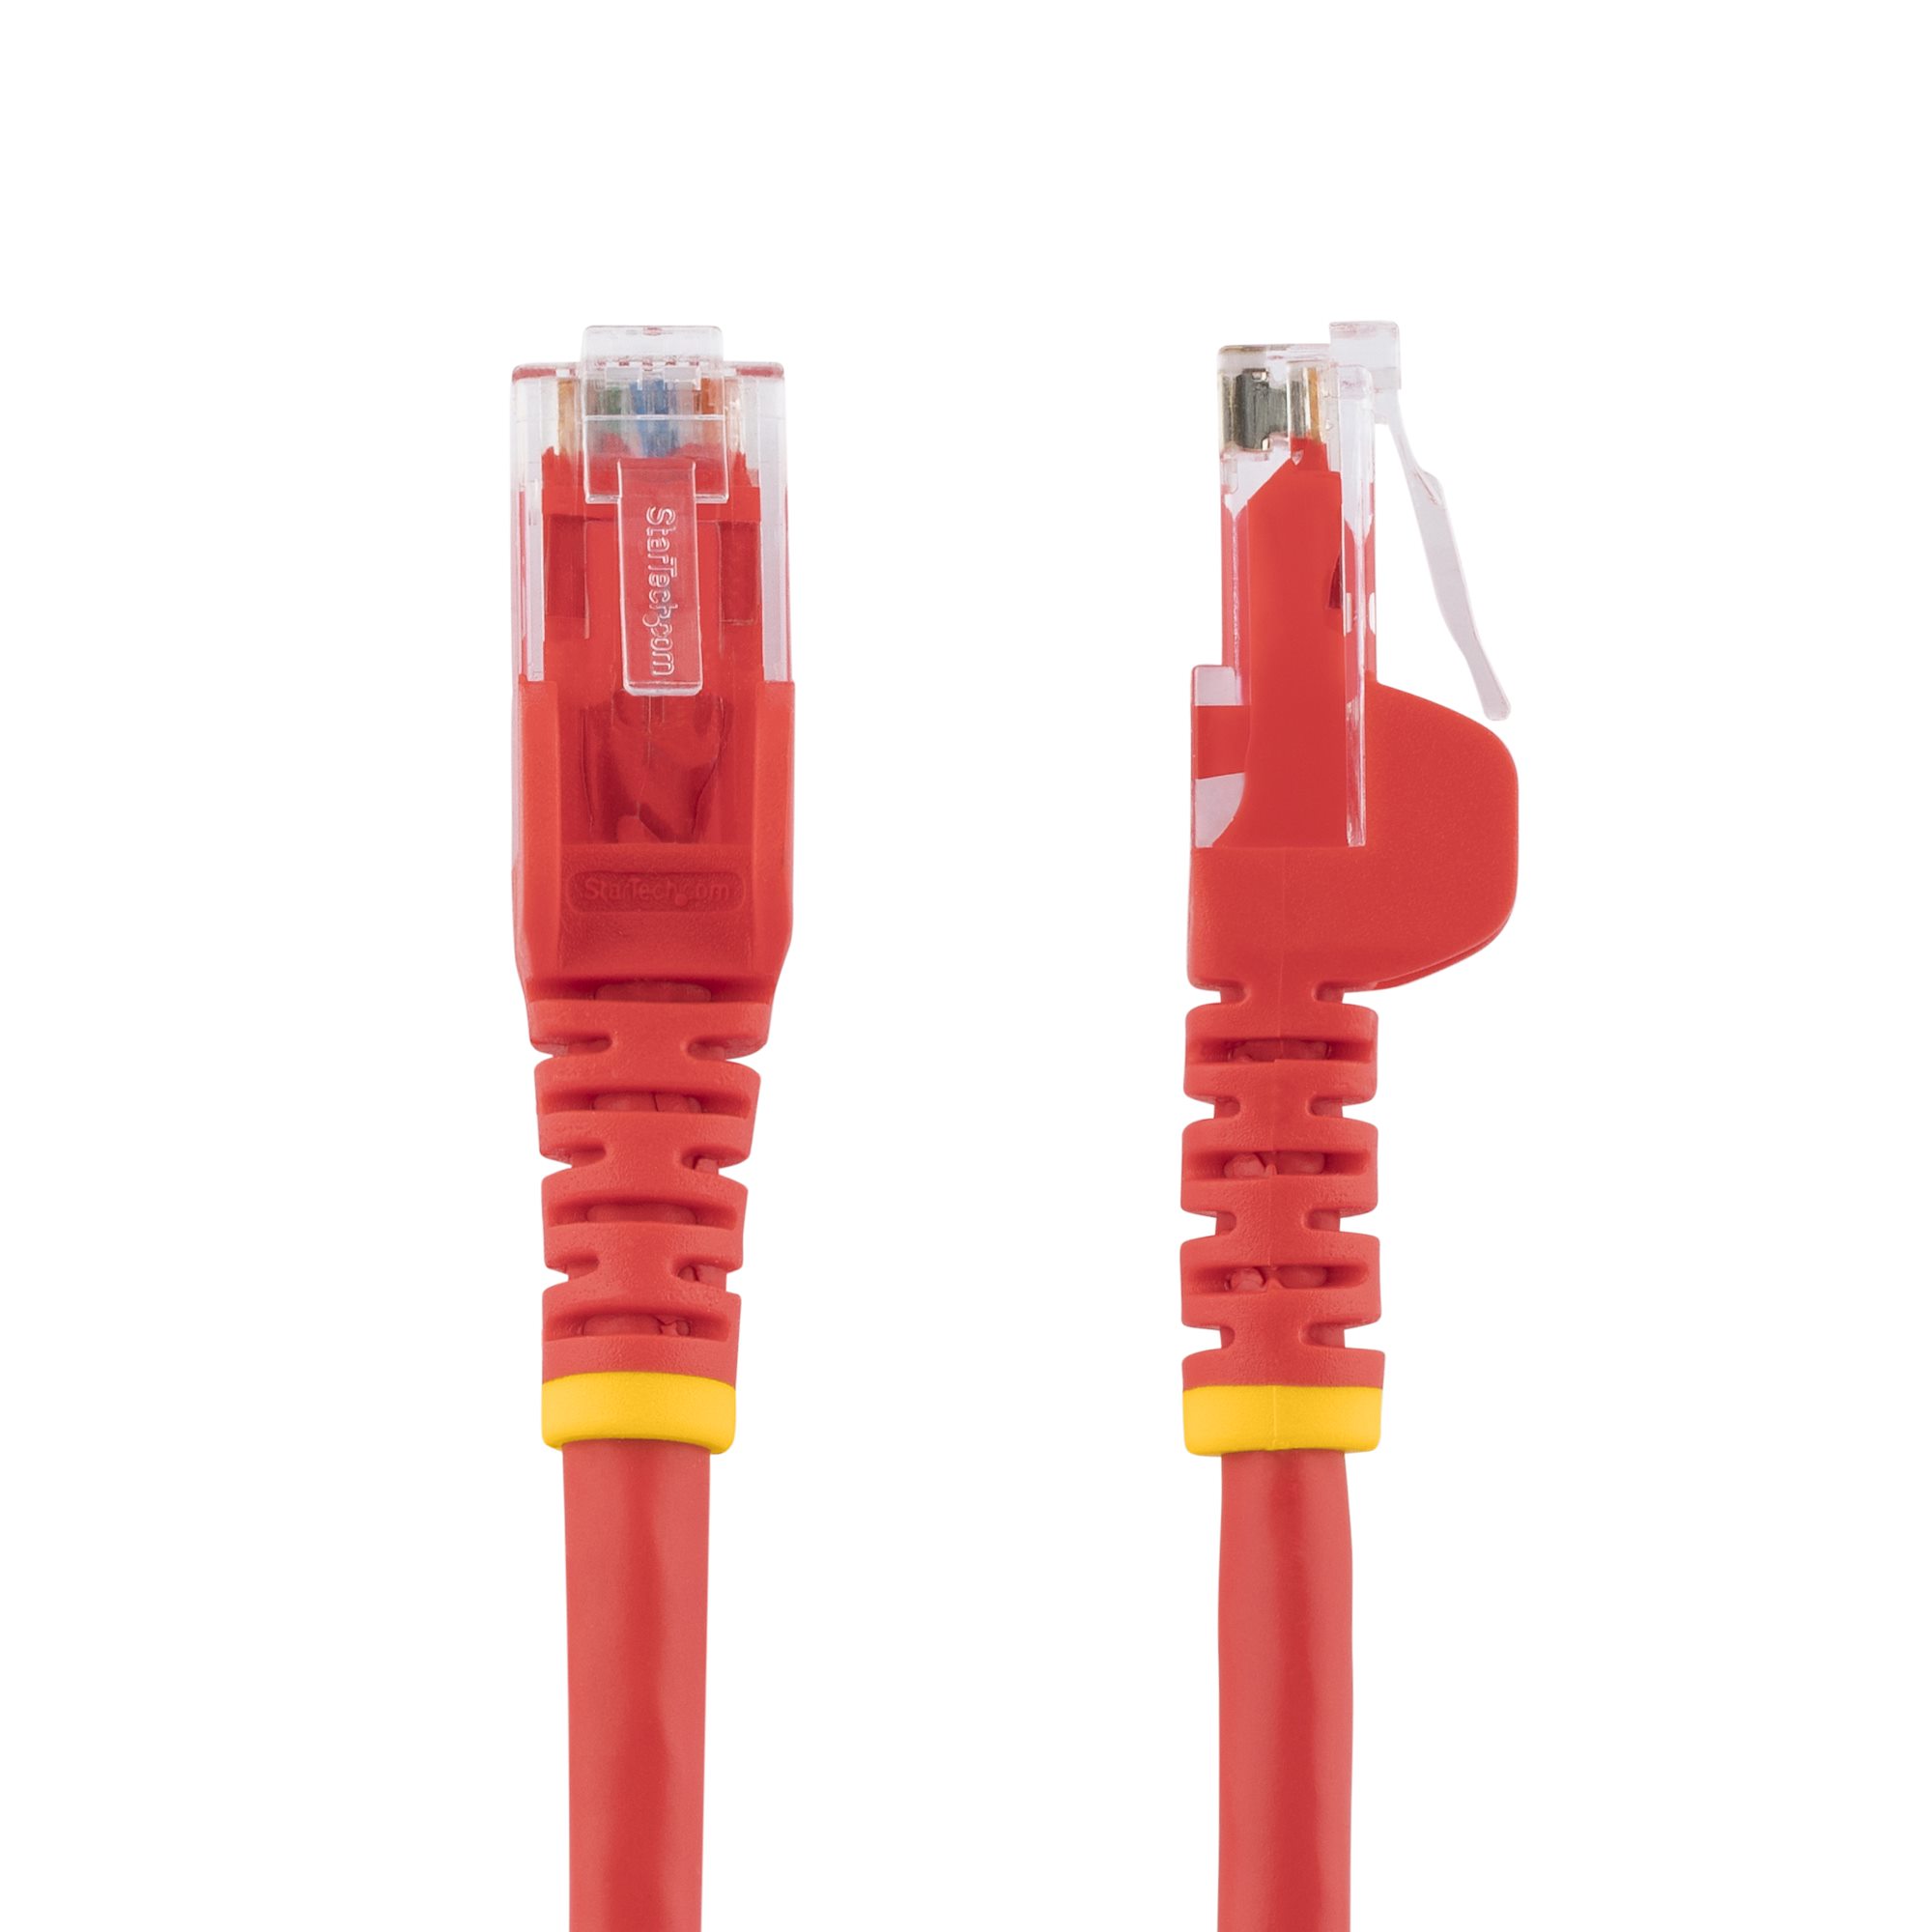 Cable De Red Cat6 Patch Cord Utp 3 Metros Gigabit Vention